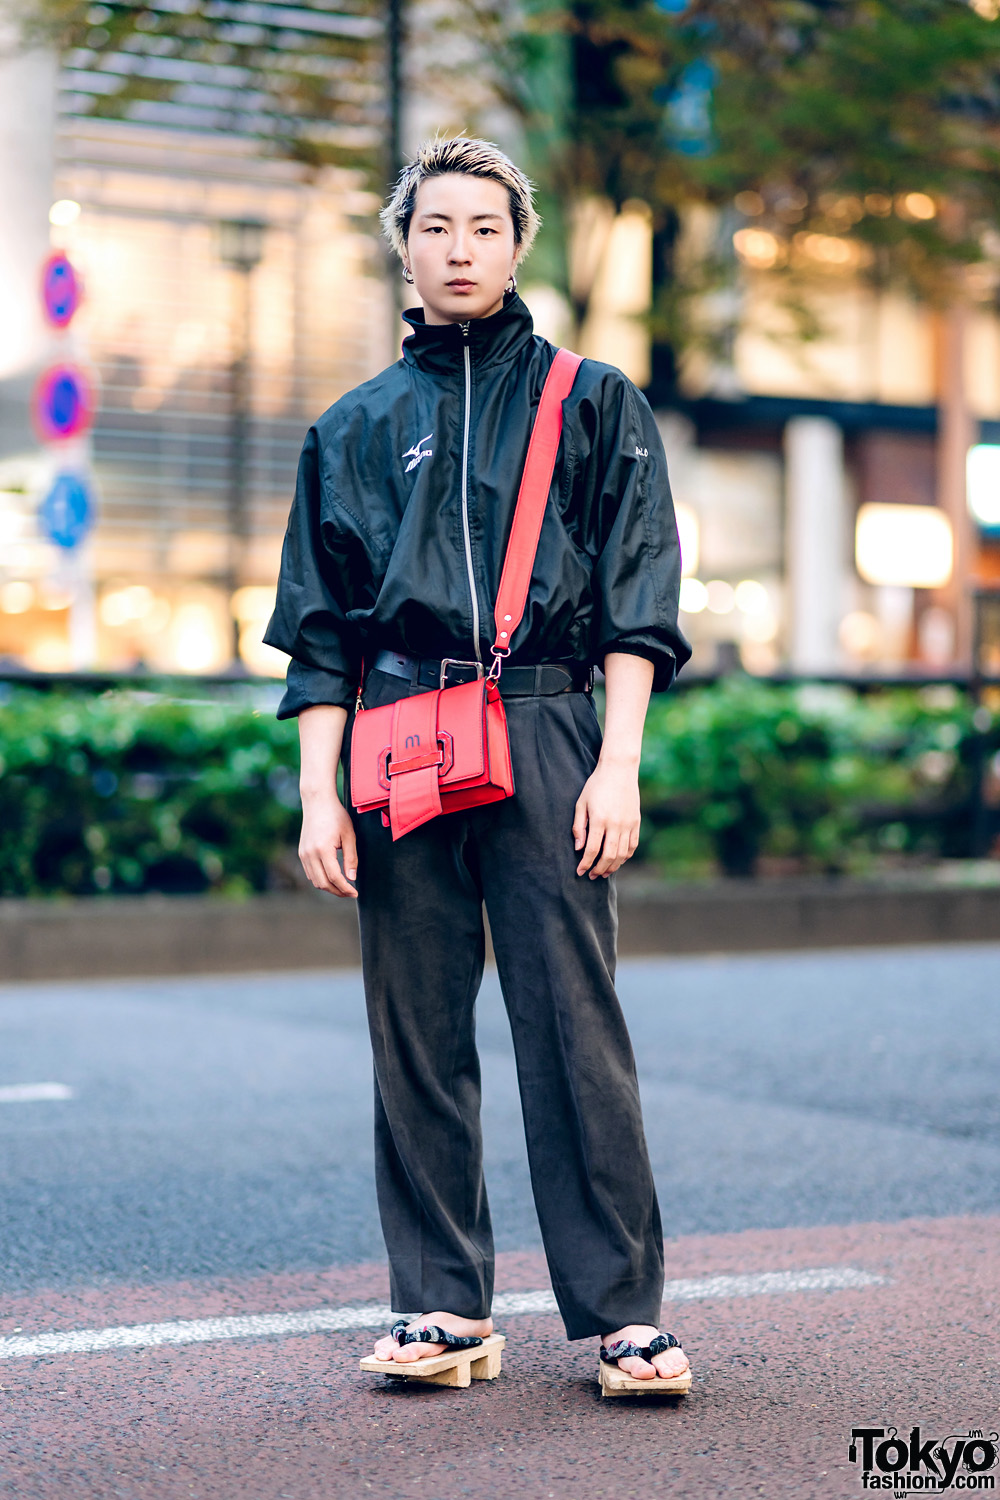 All Black Street Style in Harajuku w/ Mizuno Jacket, Suede Pants, Crossbody Bag & Geta Sandals